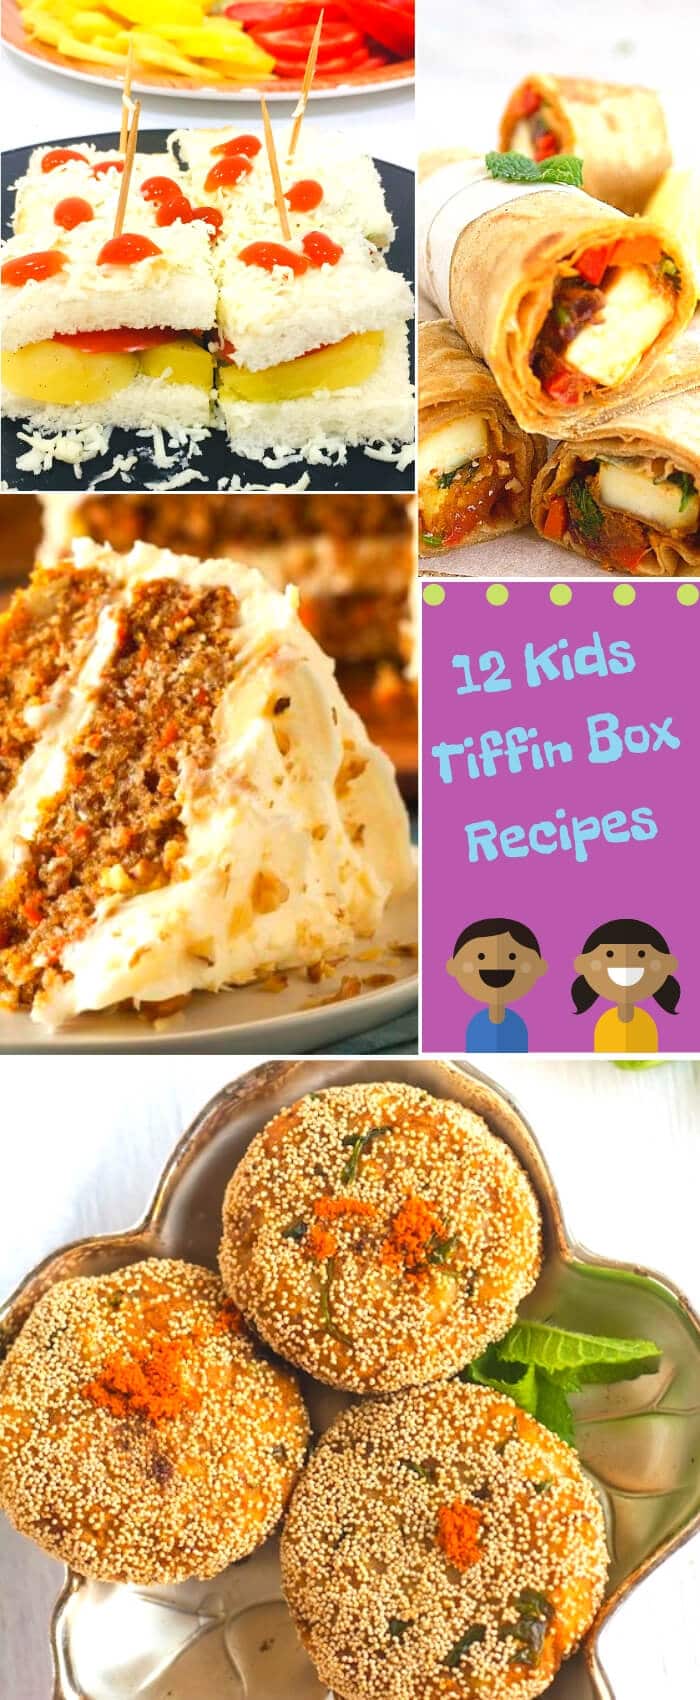 tiffin box recipes